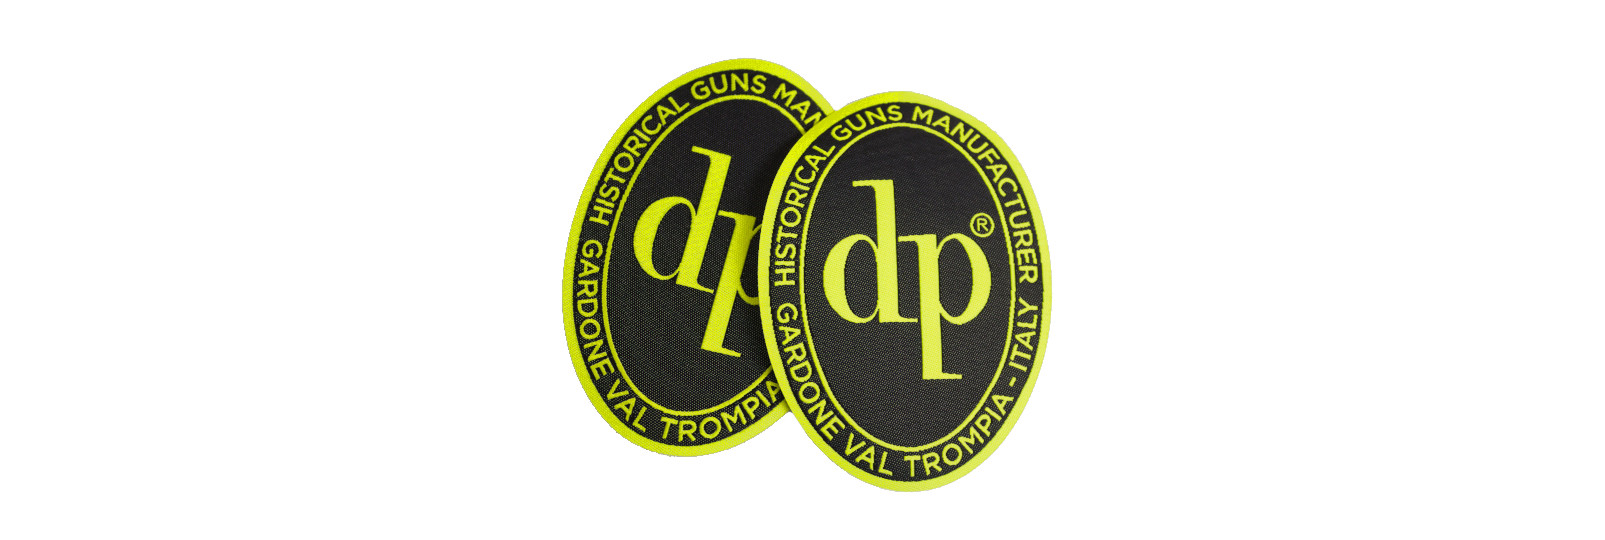 "dp" logo patch